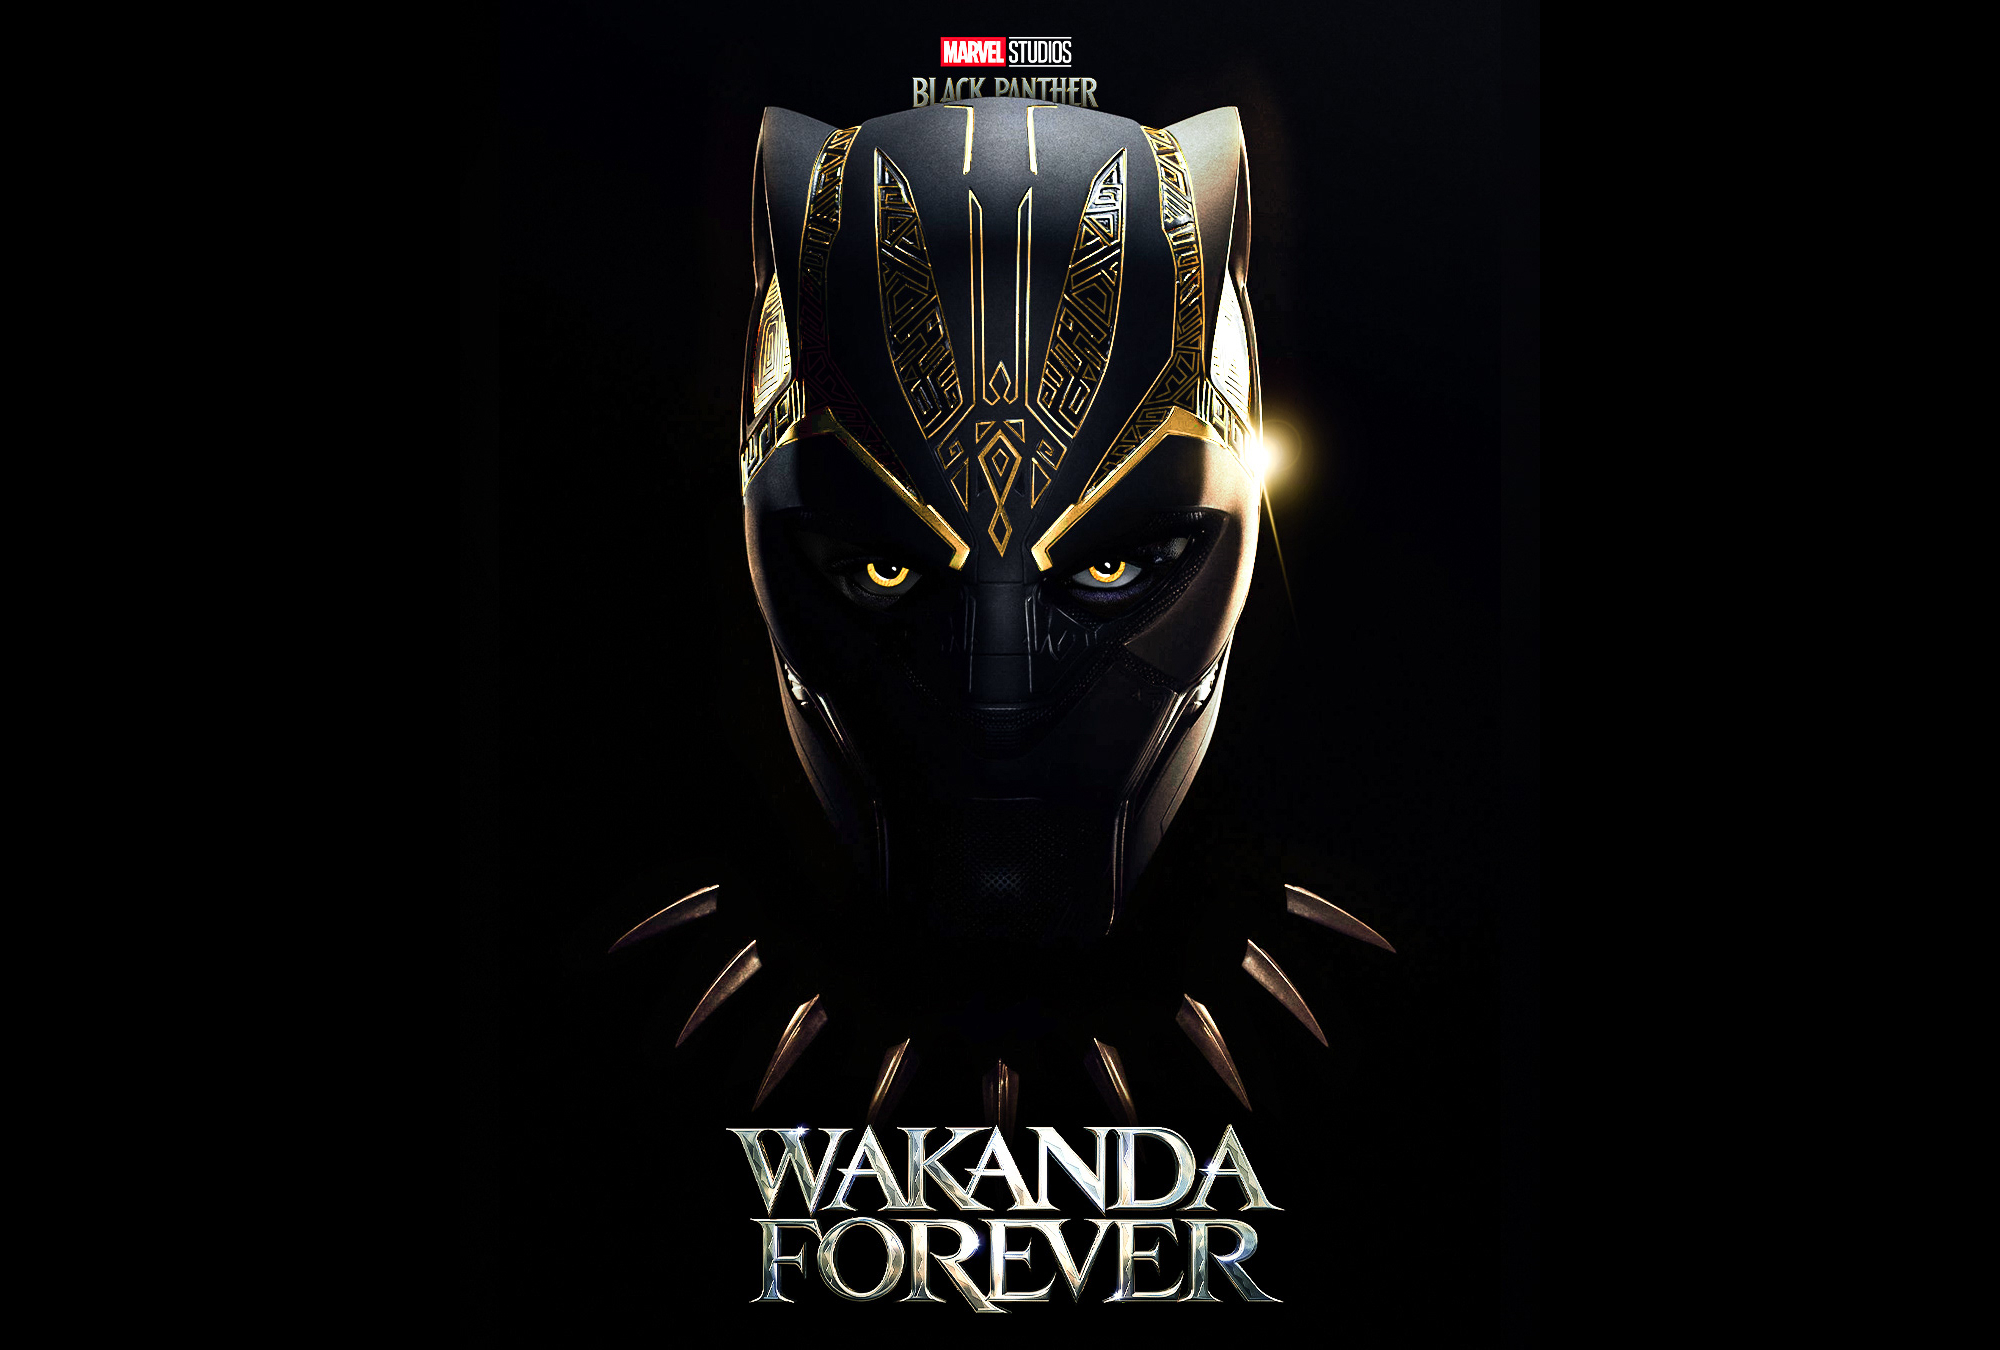 2932x2932201976 Black Panther Wakanda Forever Hd Fan Art Poster 2932x2932201976 Resolution 8600